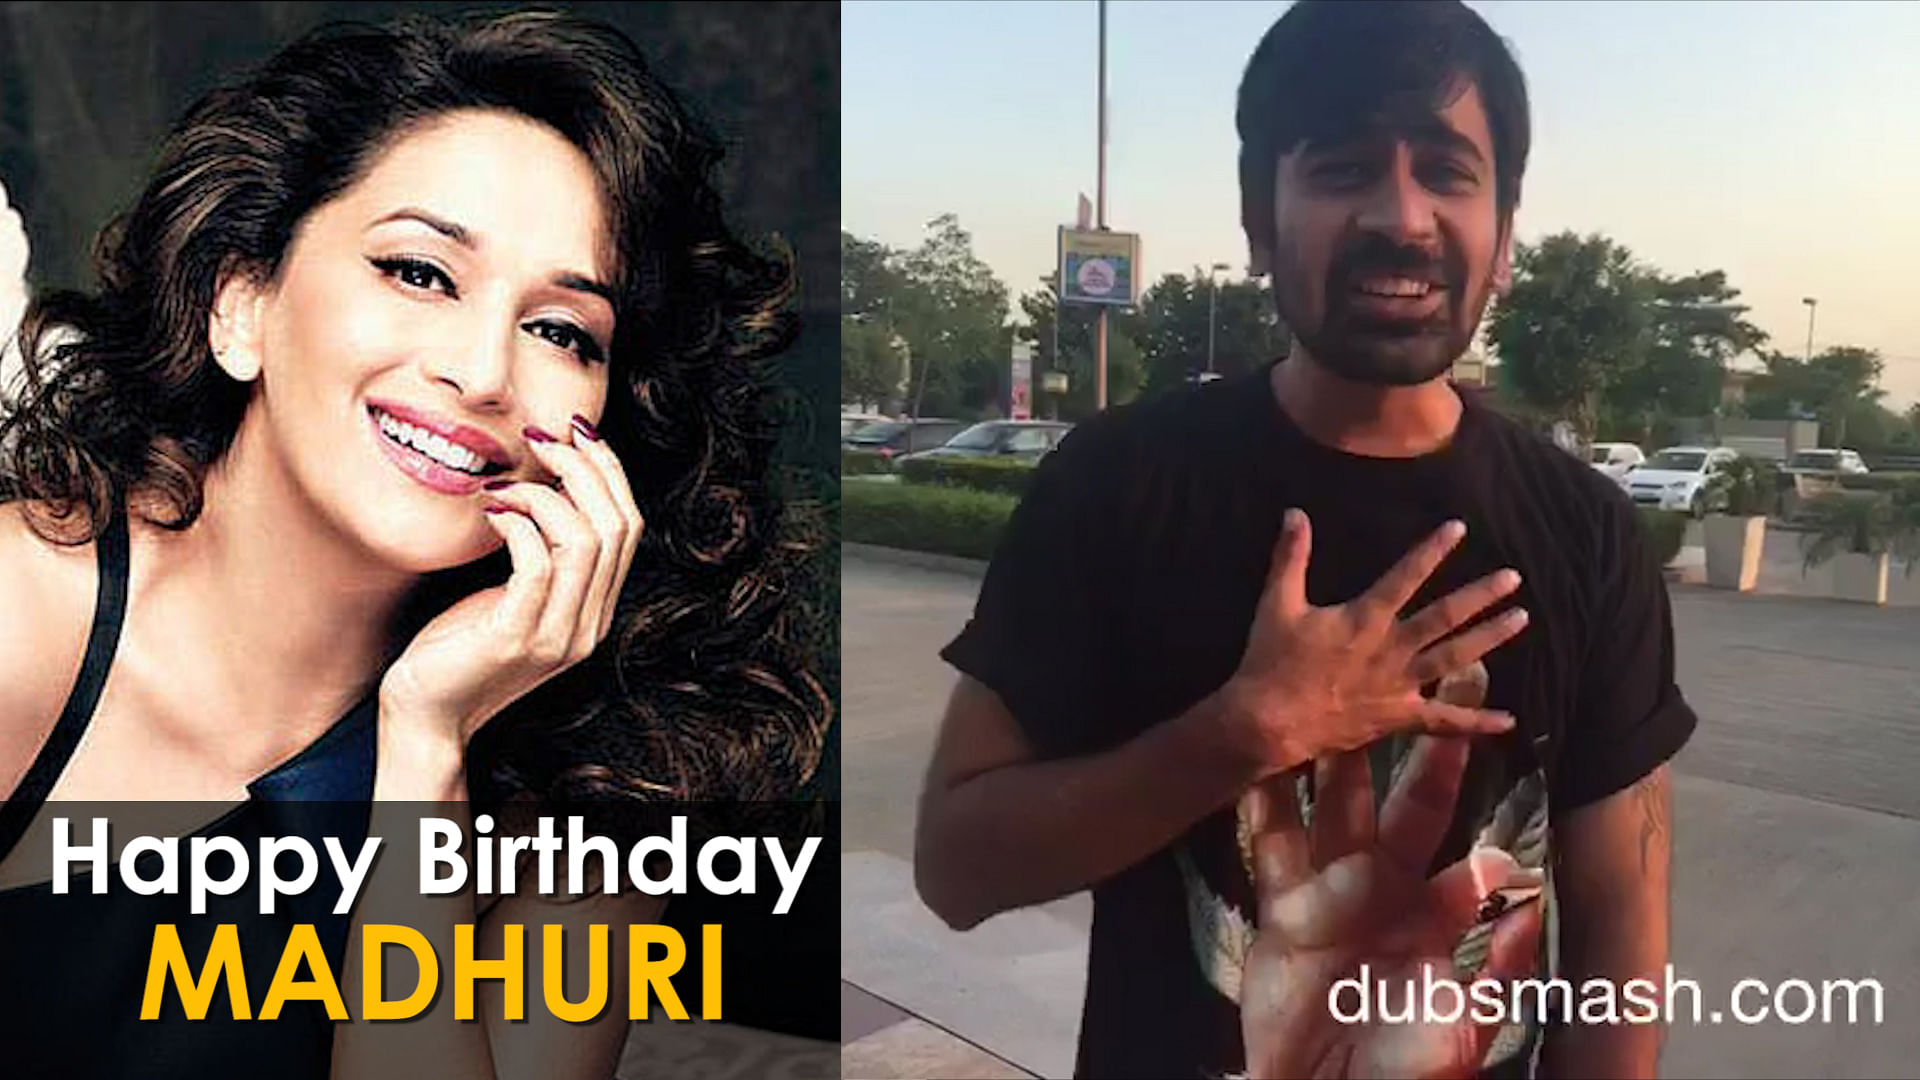 Wishing Madhuri a dubsmashing birthday.&nbsp;